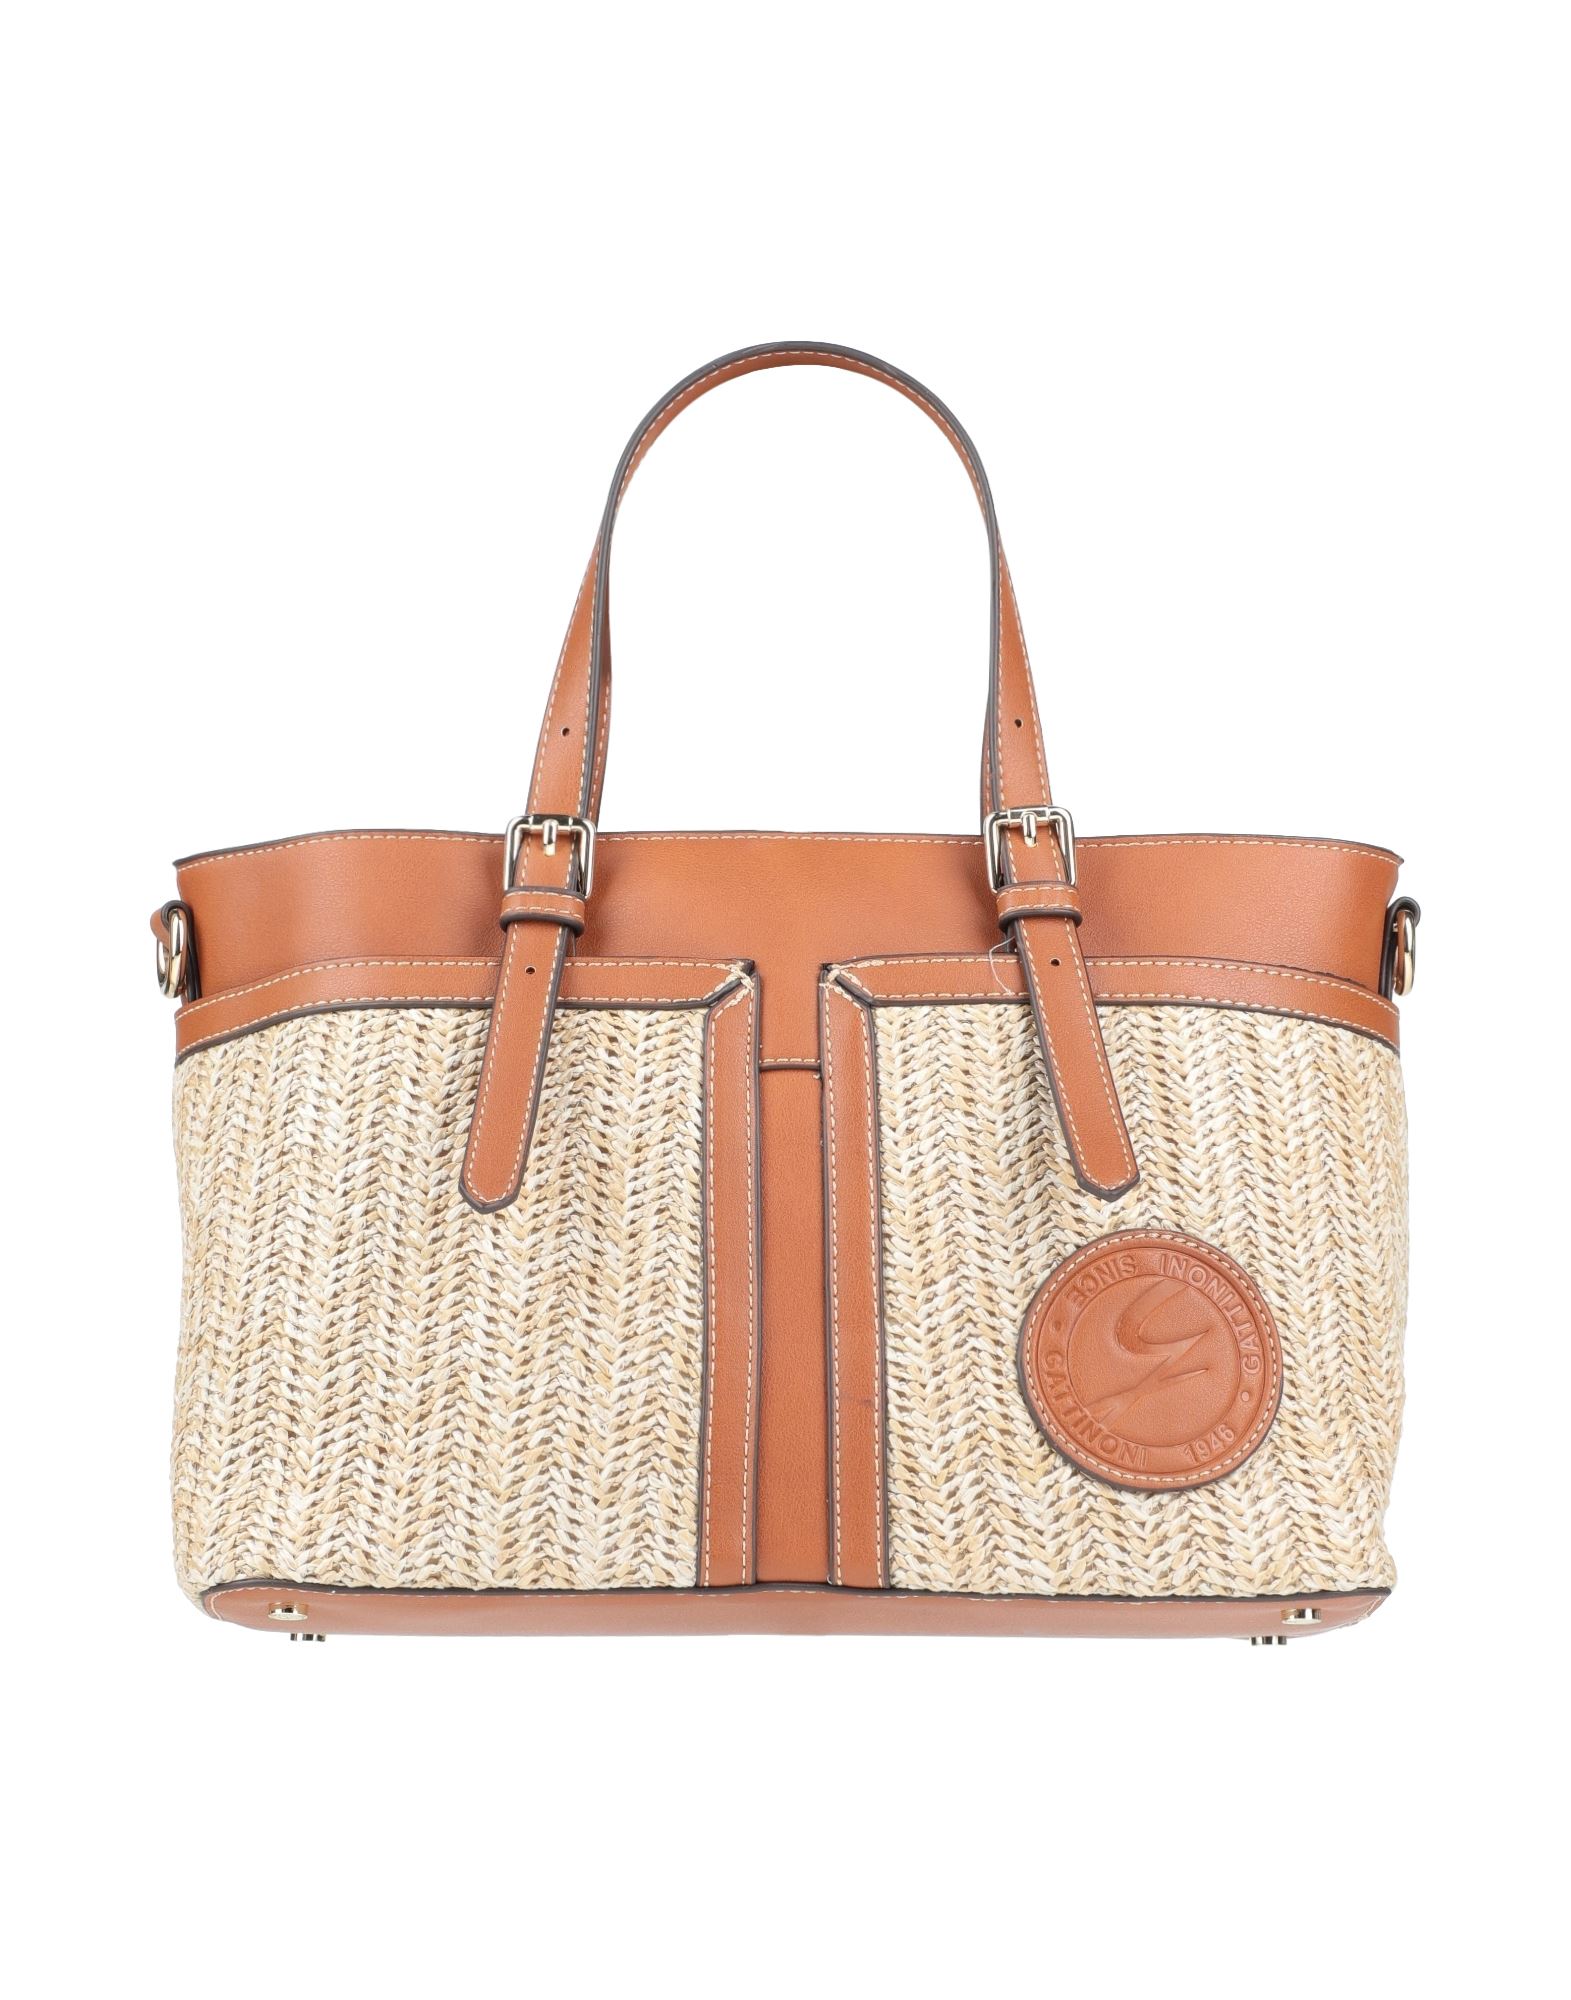 Gattinoni Handbags In Tan